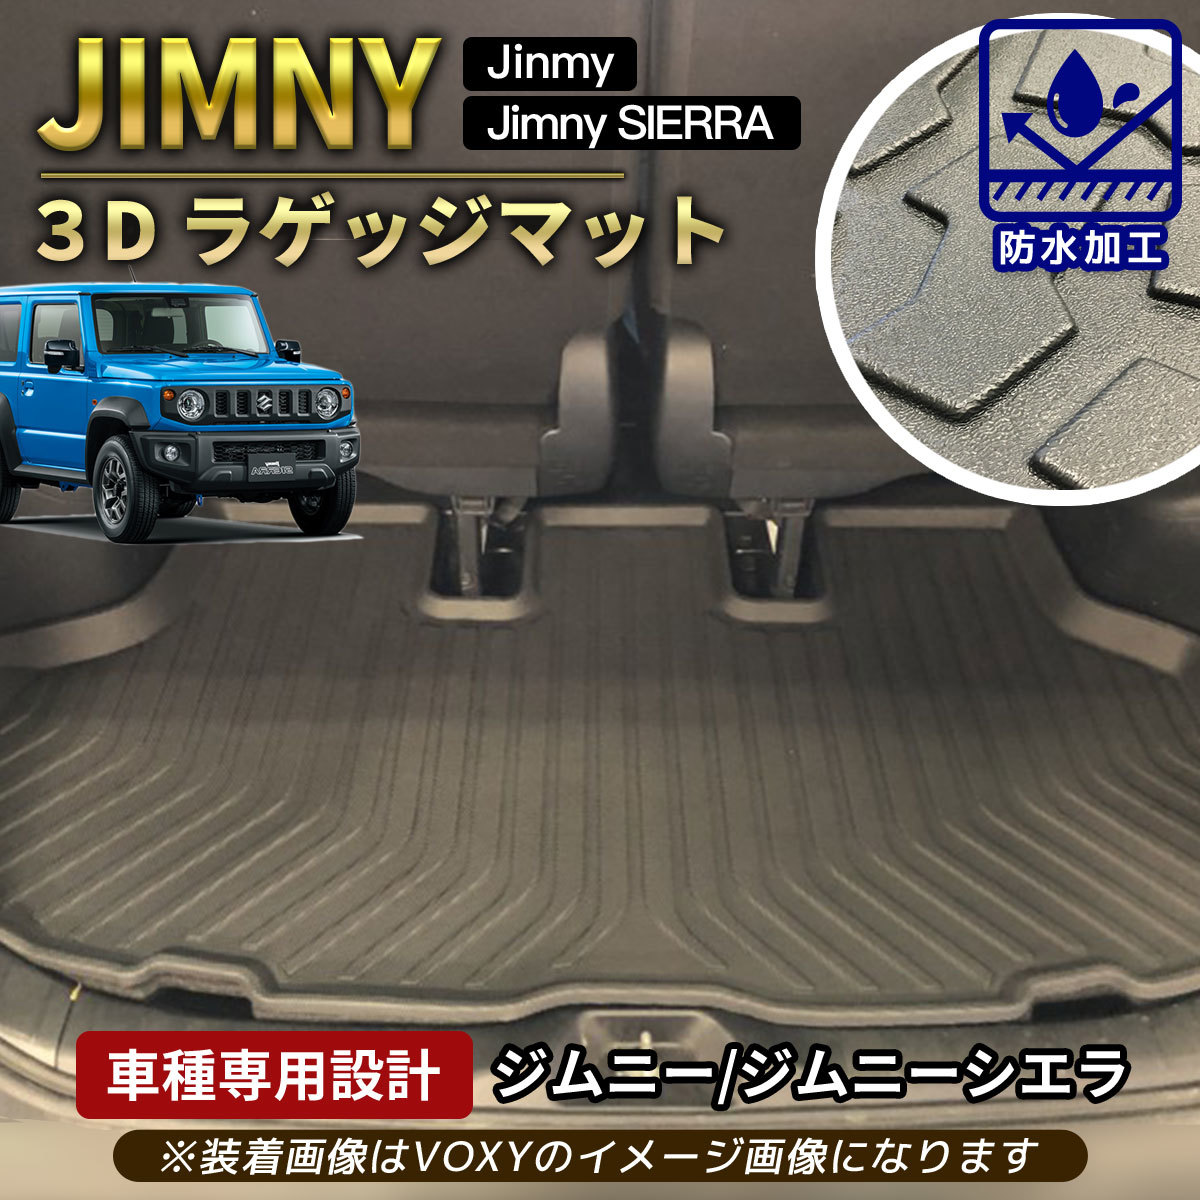  Jimny jb64 багажный коврик 3d jb74 детали Suzuki коврик на пол покрытие пола багажника Jimny Sierra покрытие пола багажника цельный багажник сиденье 